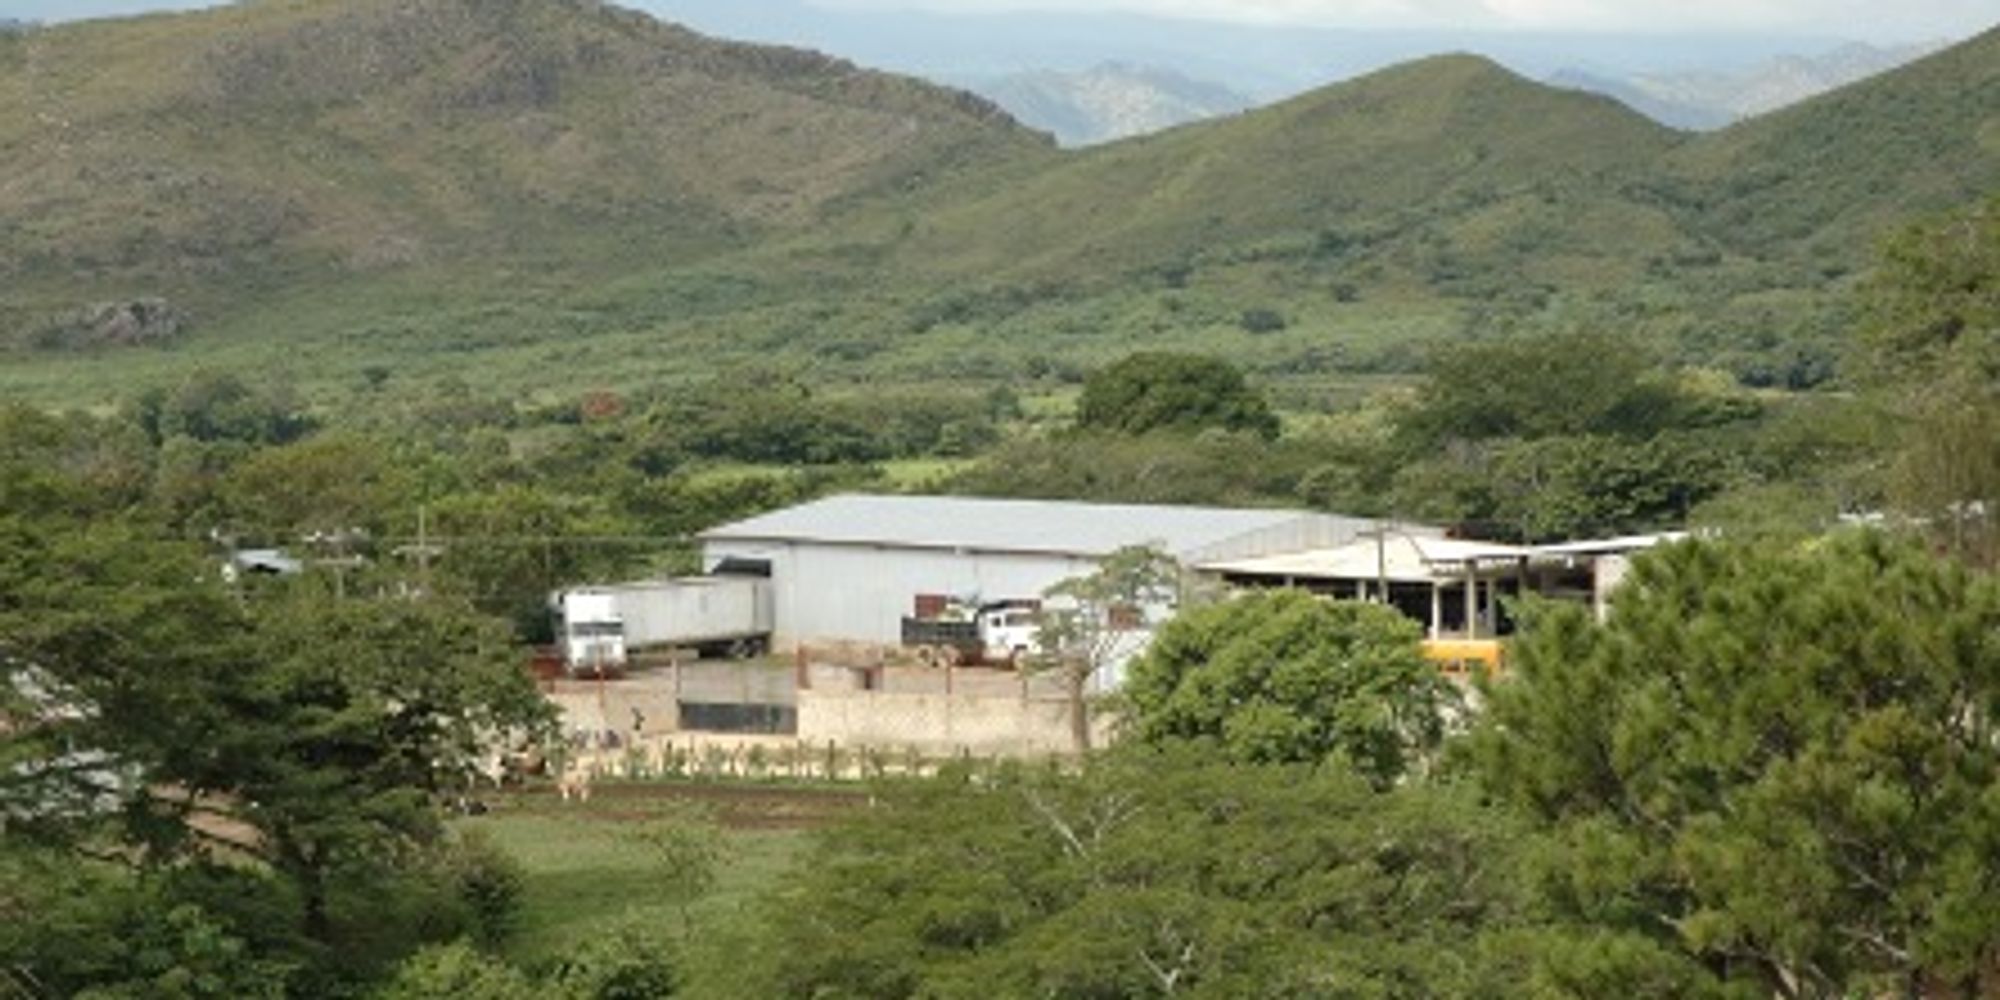 Packing house for export vegetables from Honduras